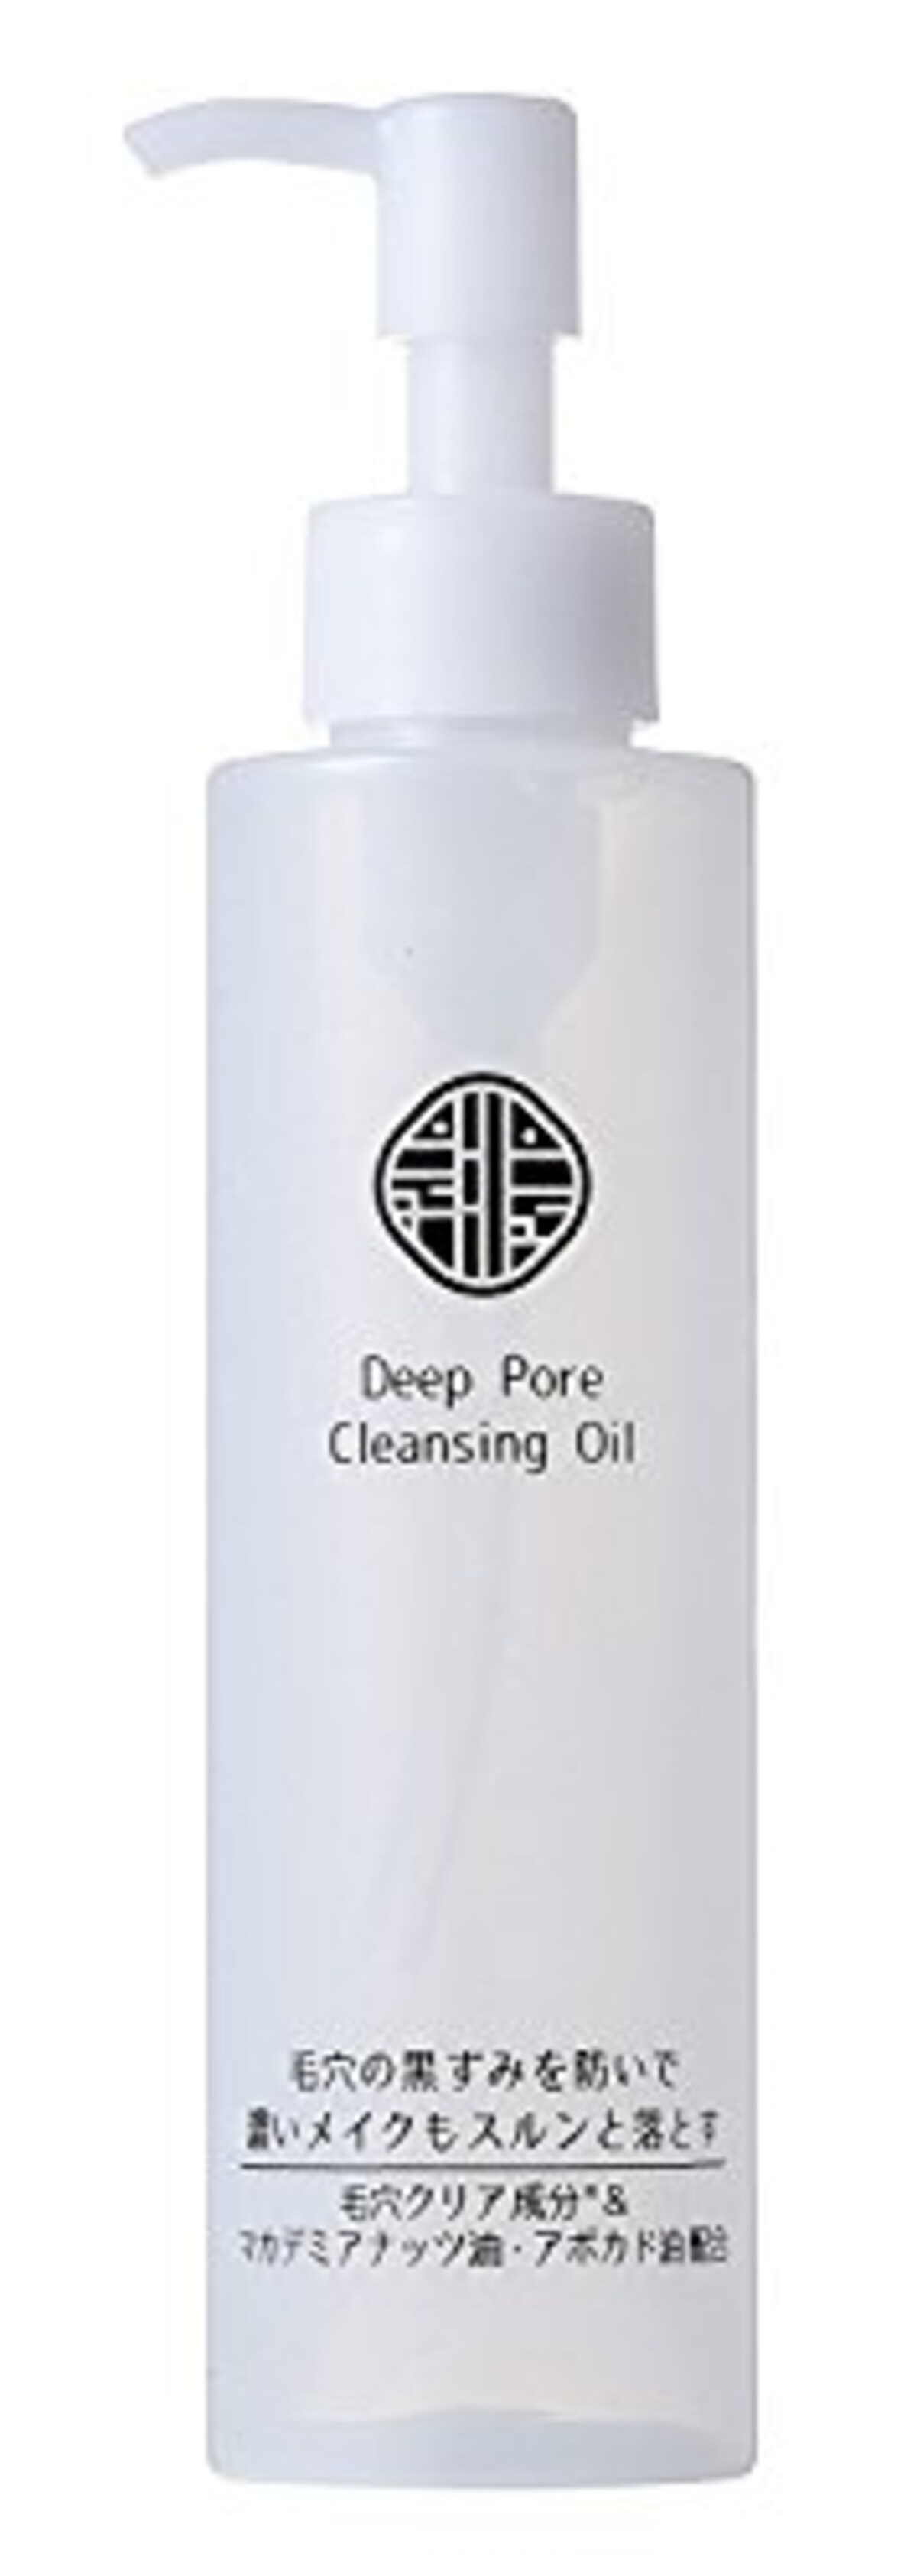 Deep Pore Cleansing Oil